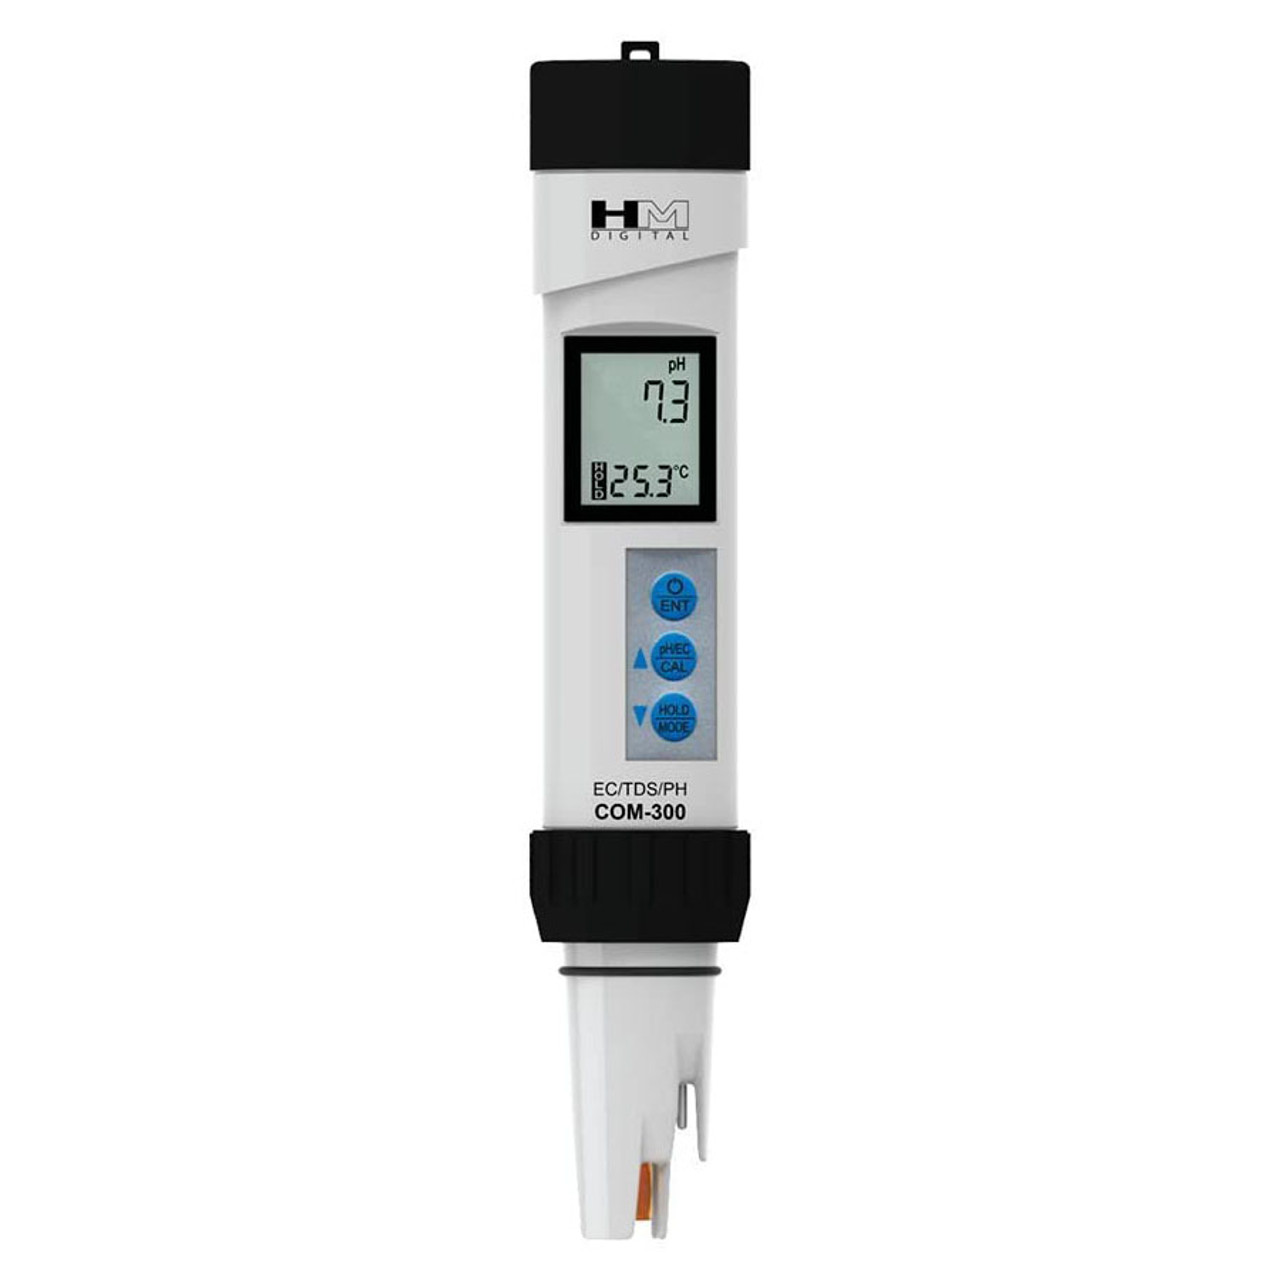 Digital TDS/pH testing Meter Pen Type pH Meter for Hydroponics,Household  Water